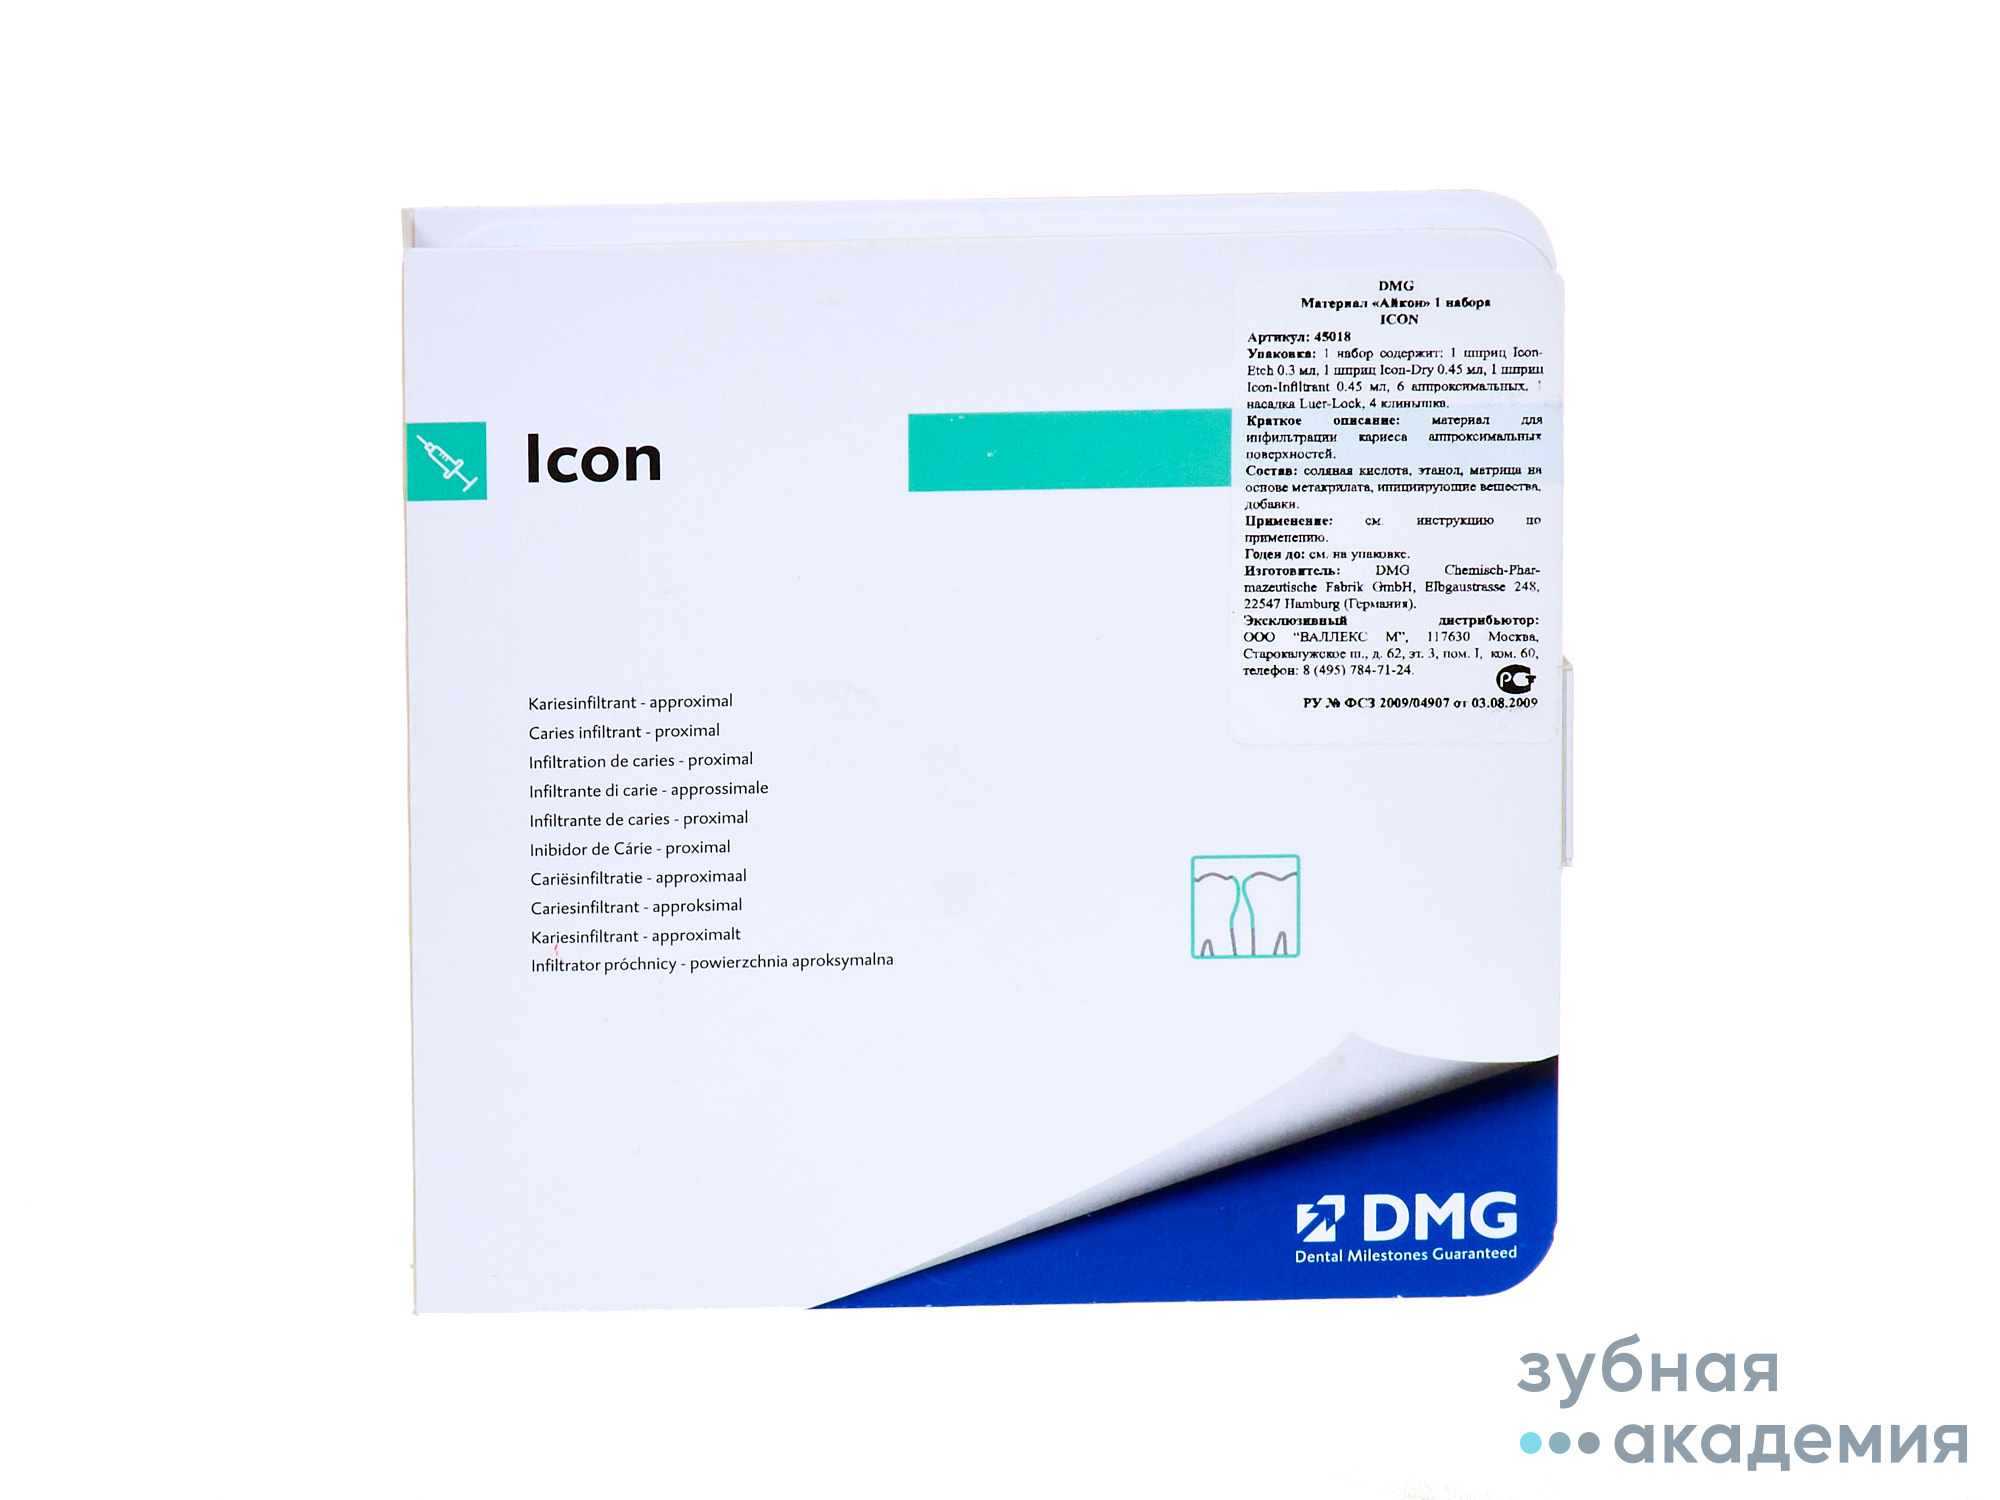  ICON  набор д/ аппроксимальных поверхностей упаковка 0.3 мл+0,45мл+0,45мл/DMG/ Германия